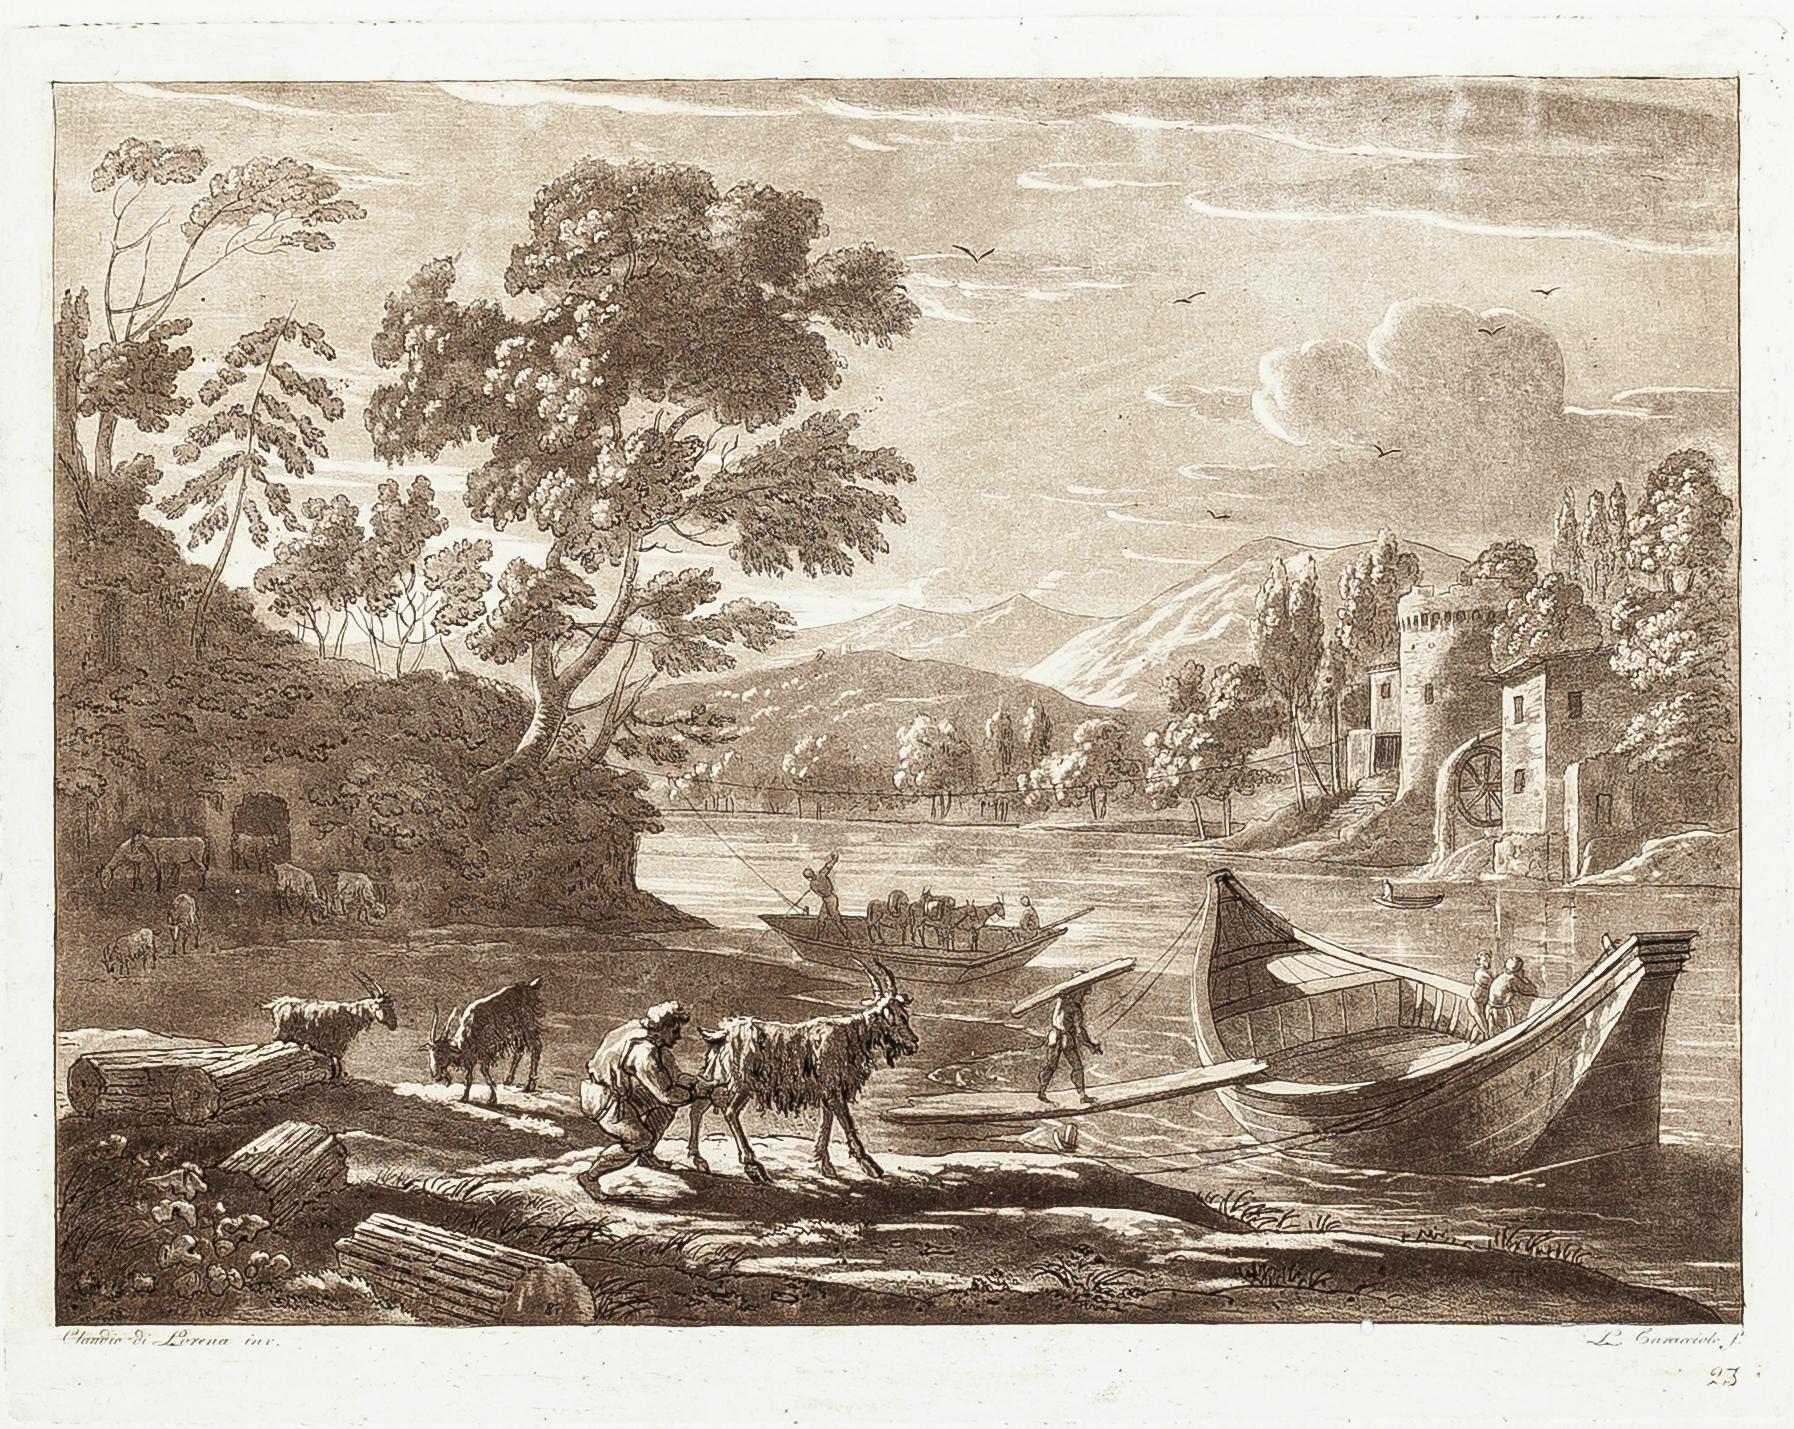 Ludovico Caracciolo Figurative Print - Landscape from Liber Veritatis - B/W Etching after Claude Lorrain - 1815